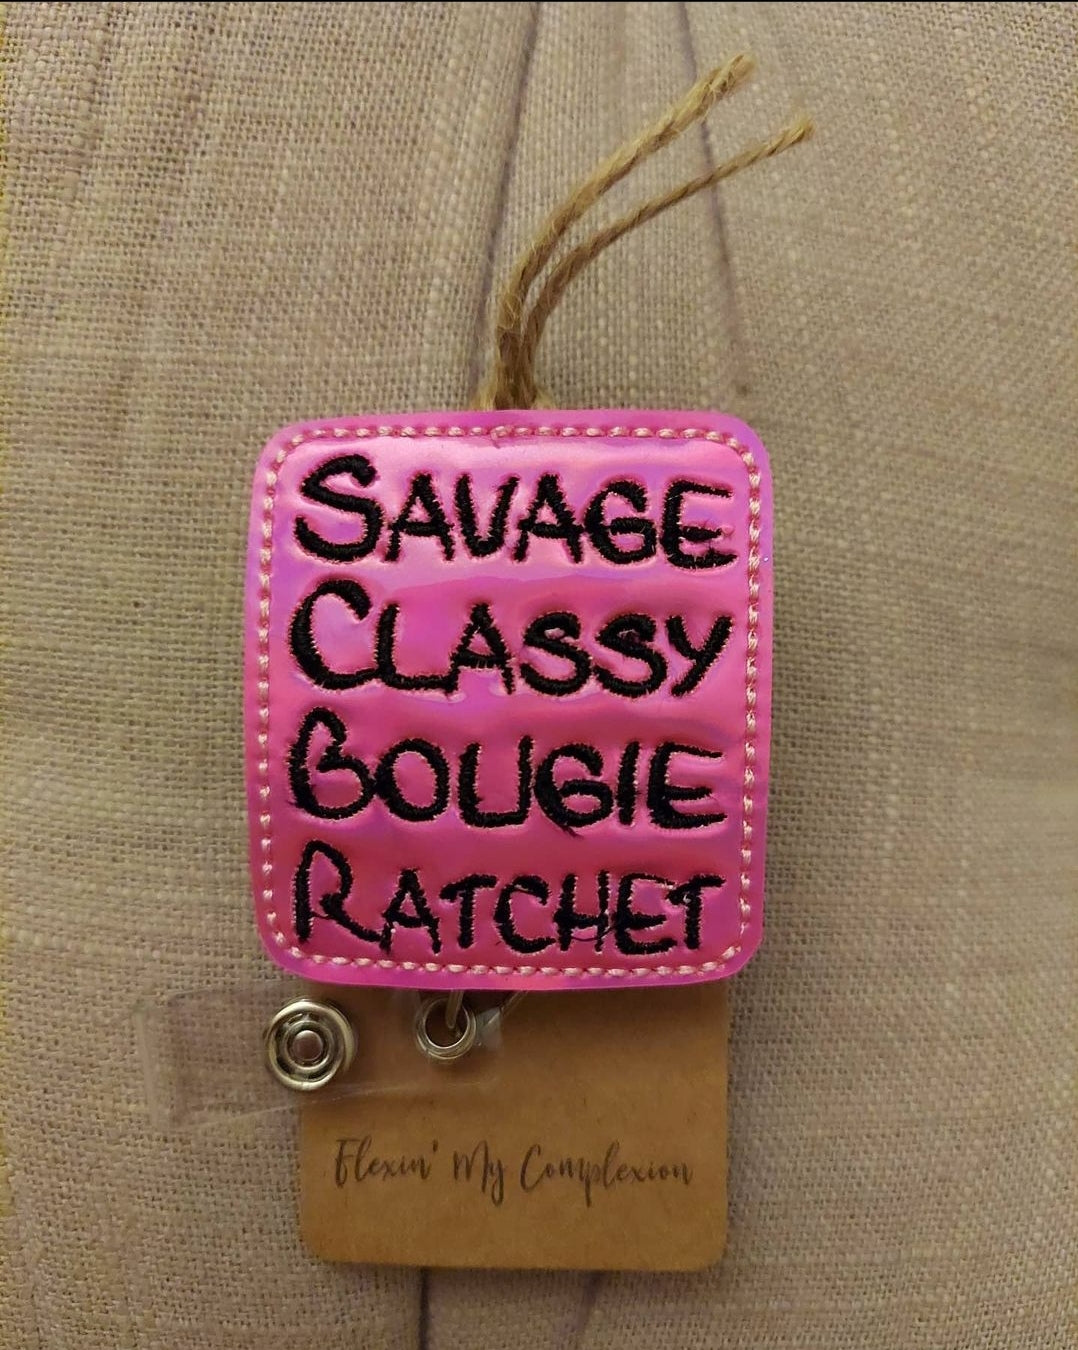 Savage Classy Bougie Ratchet